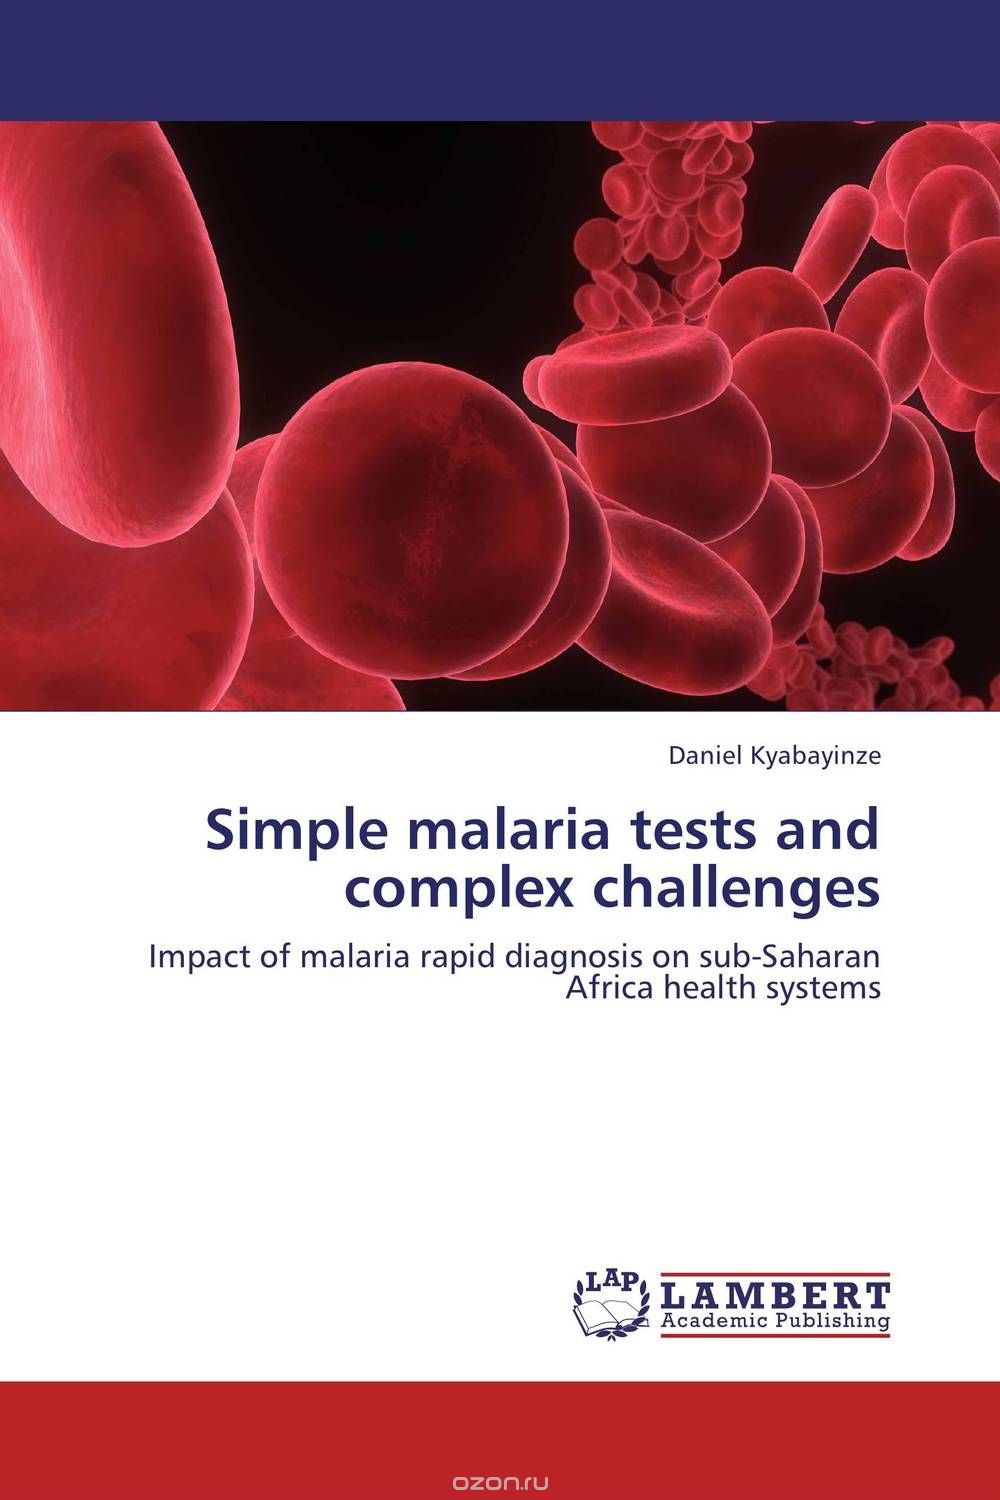 Скачать книгу "Simple malaria tests and complex challenges"